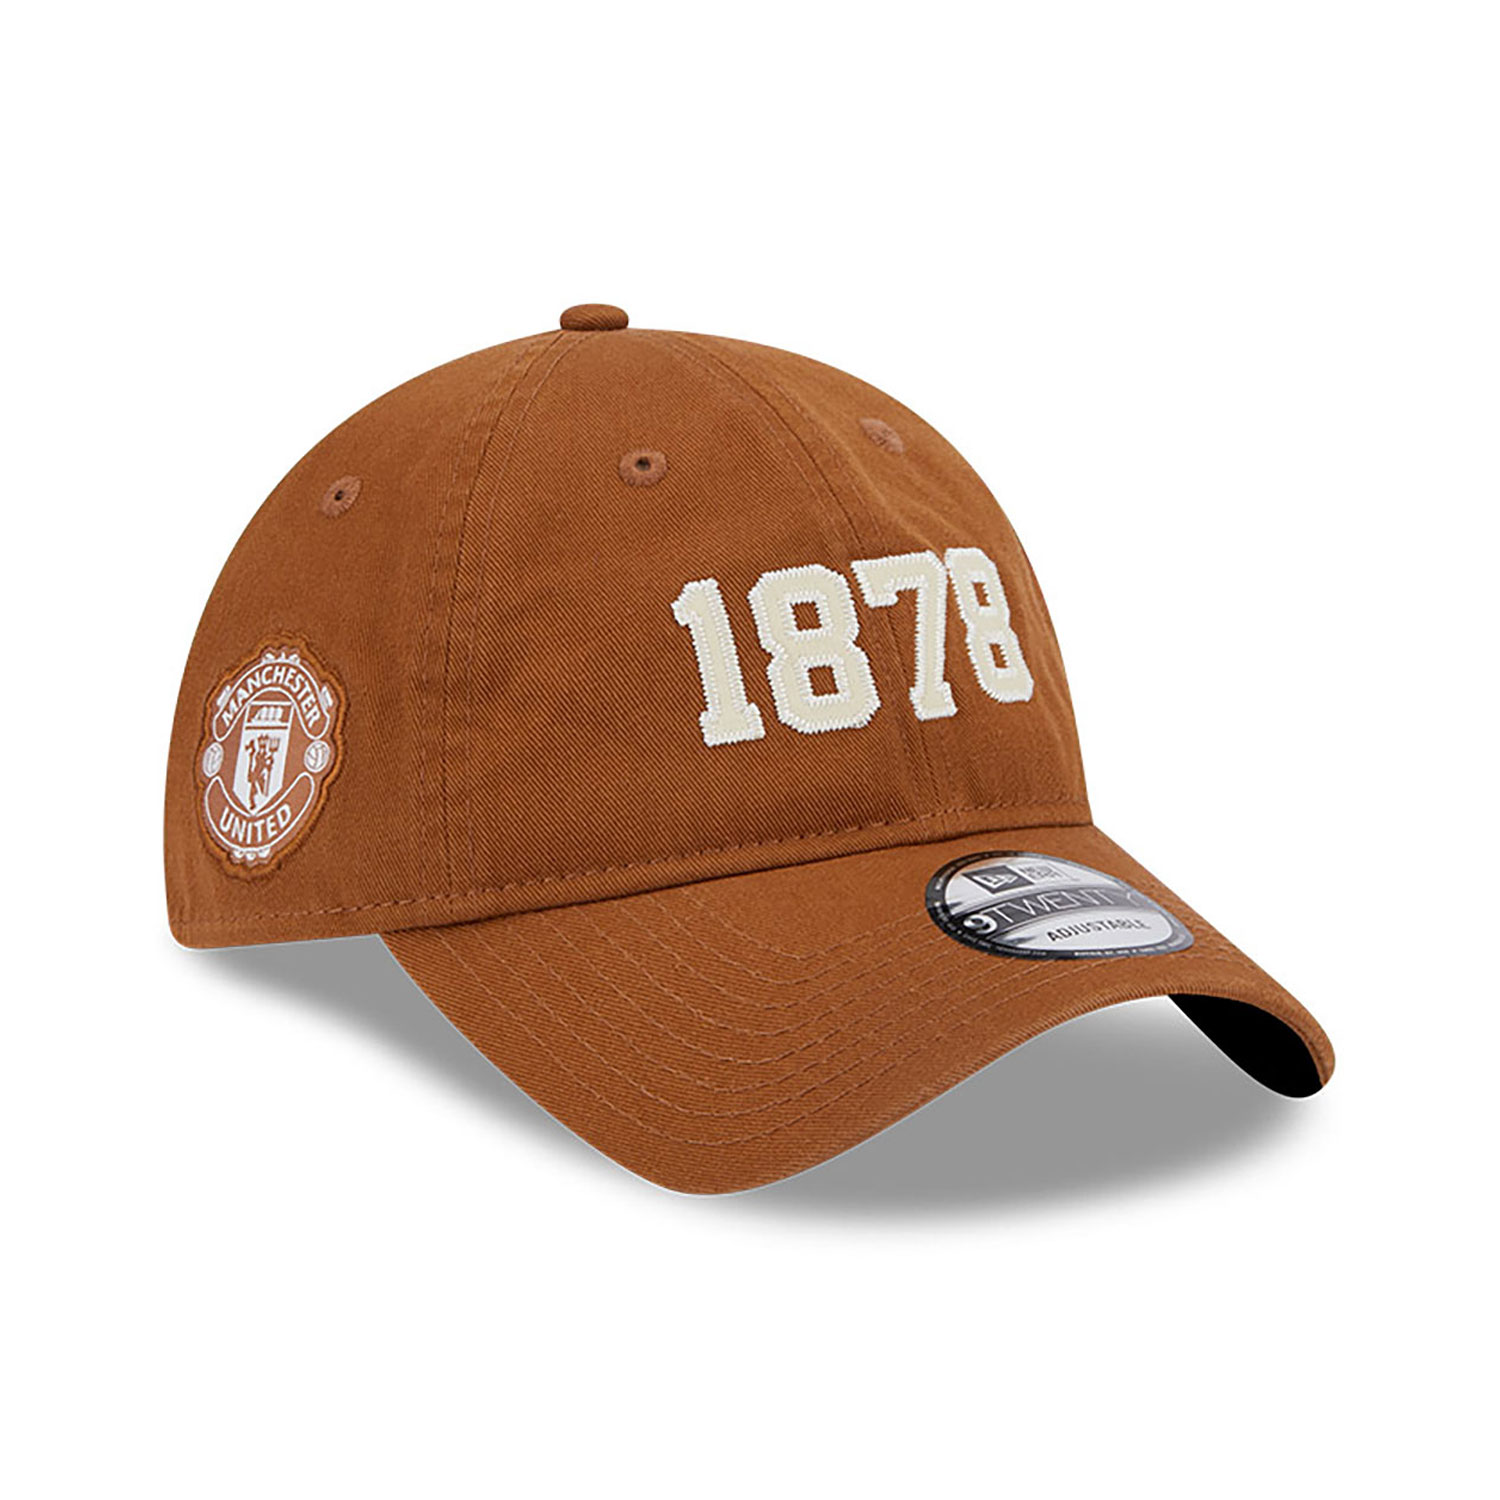 Manchester United FC 1878 Brown 9TWENTY Adjustable Cap